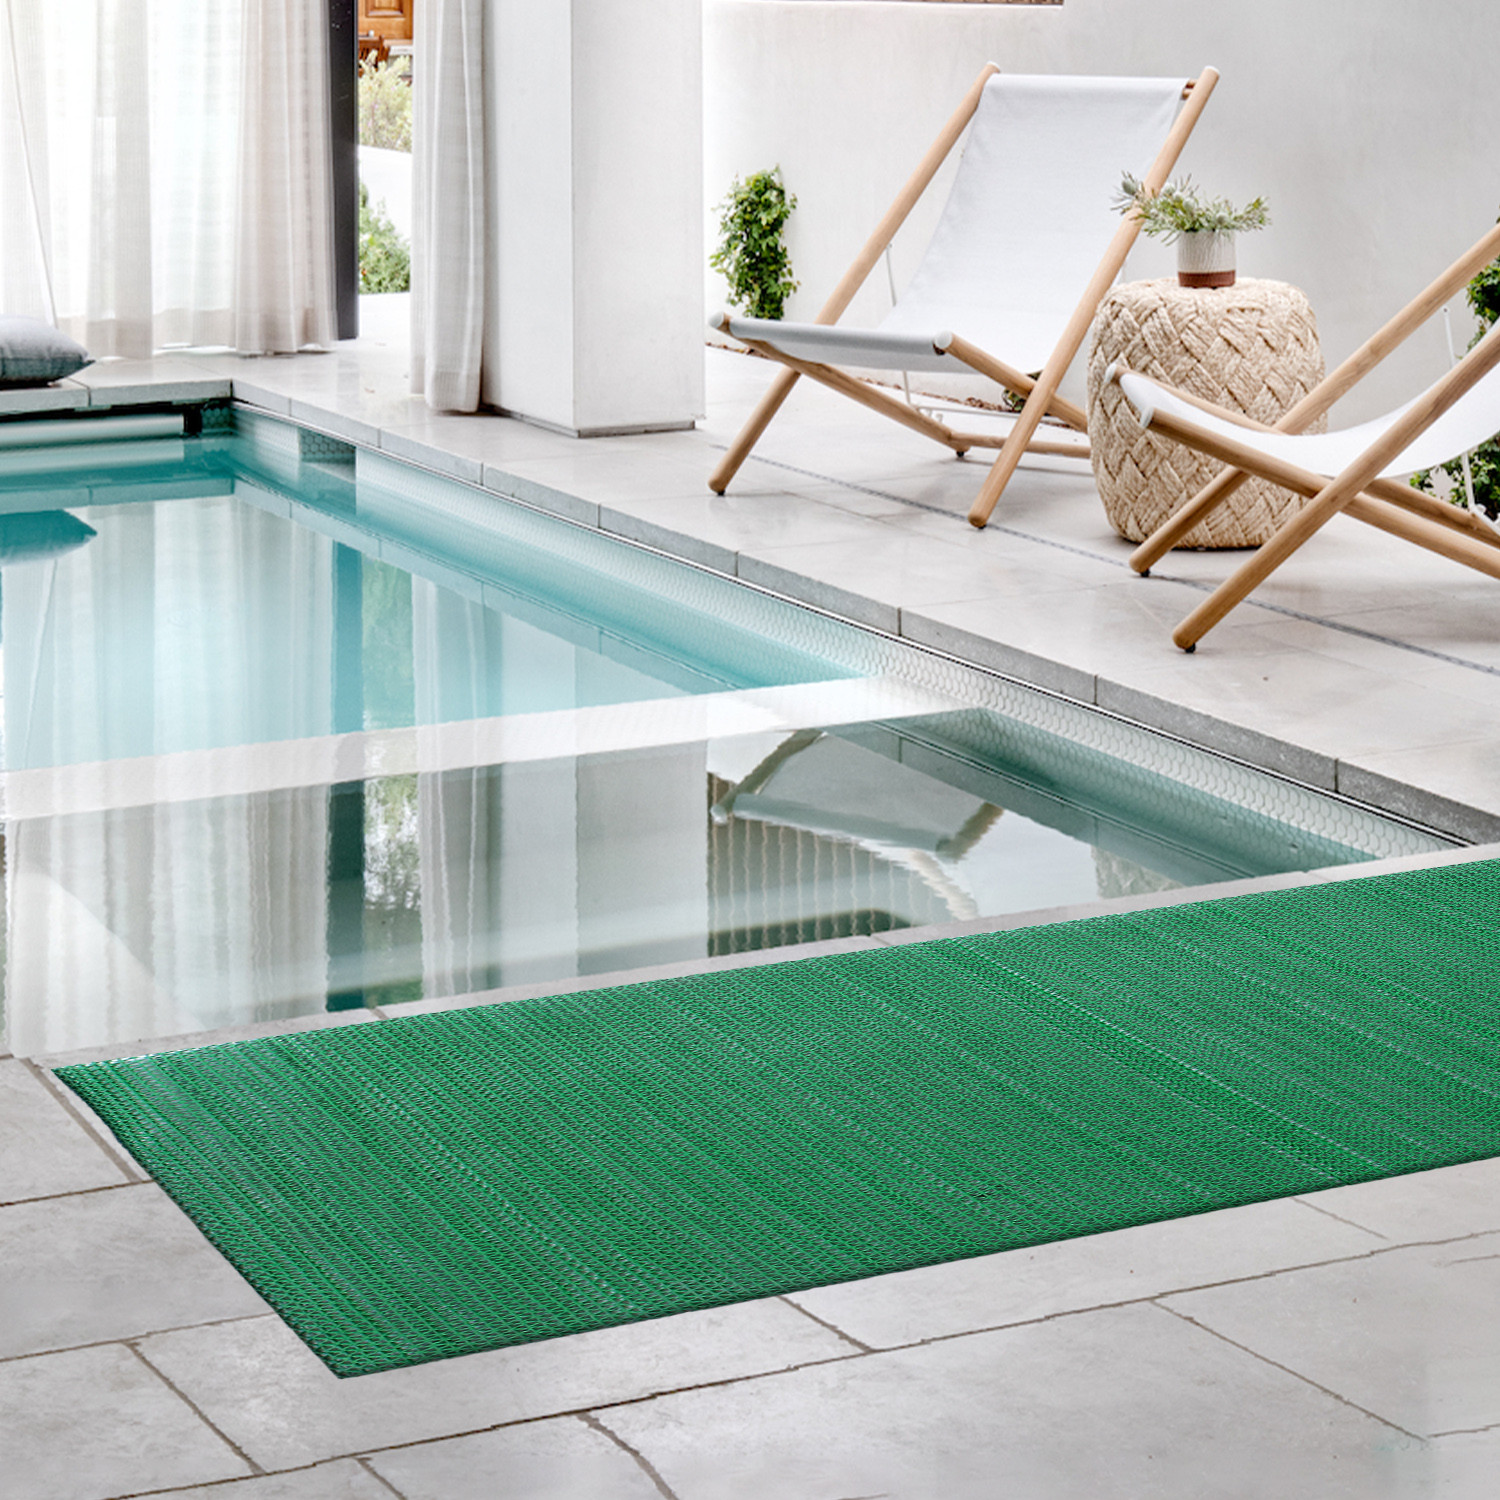 Kuber Industries Rubber Waterproof Anti-Skid Swimming Pool Mat|Shower Mat|Rainmat For Entrance Area,Bathroom,2 x 8 Feet (Green)